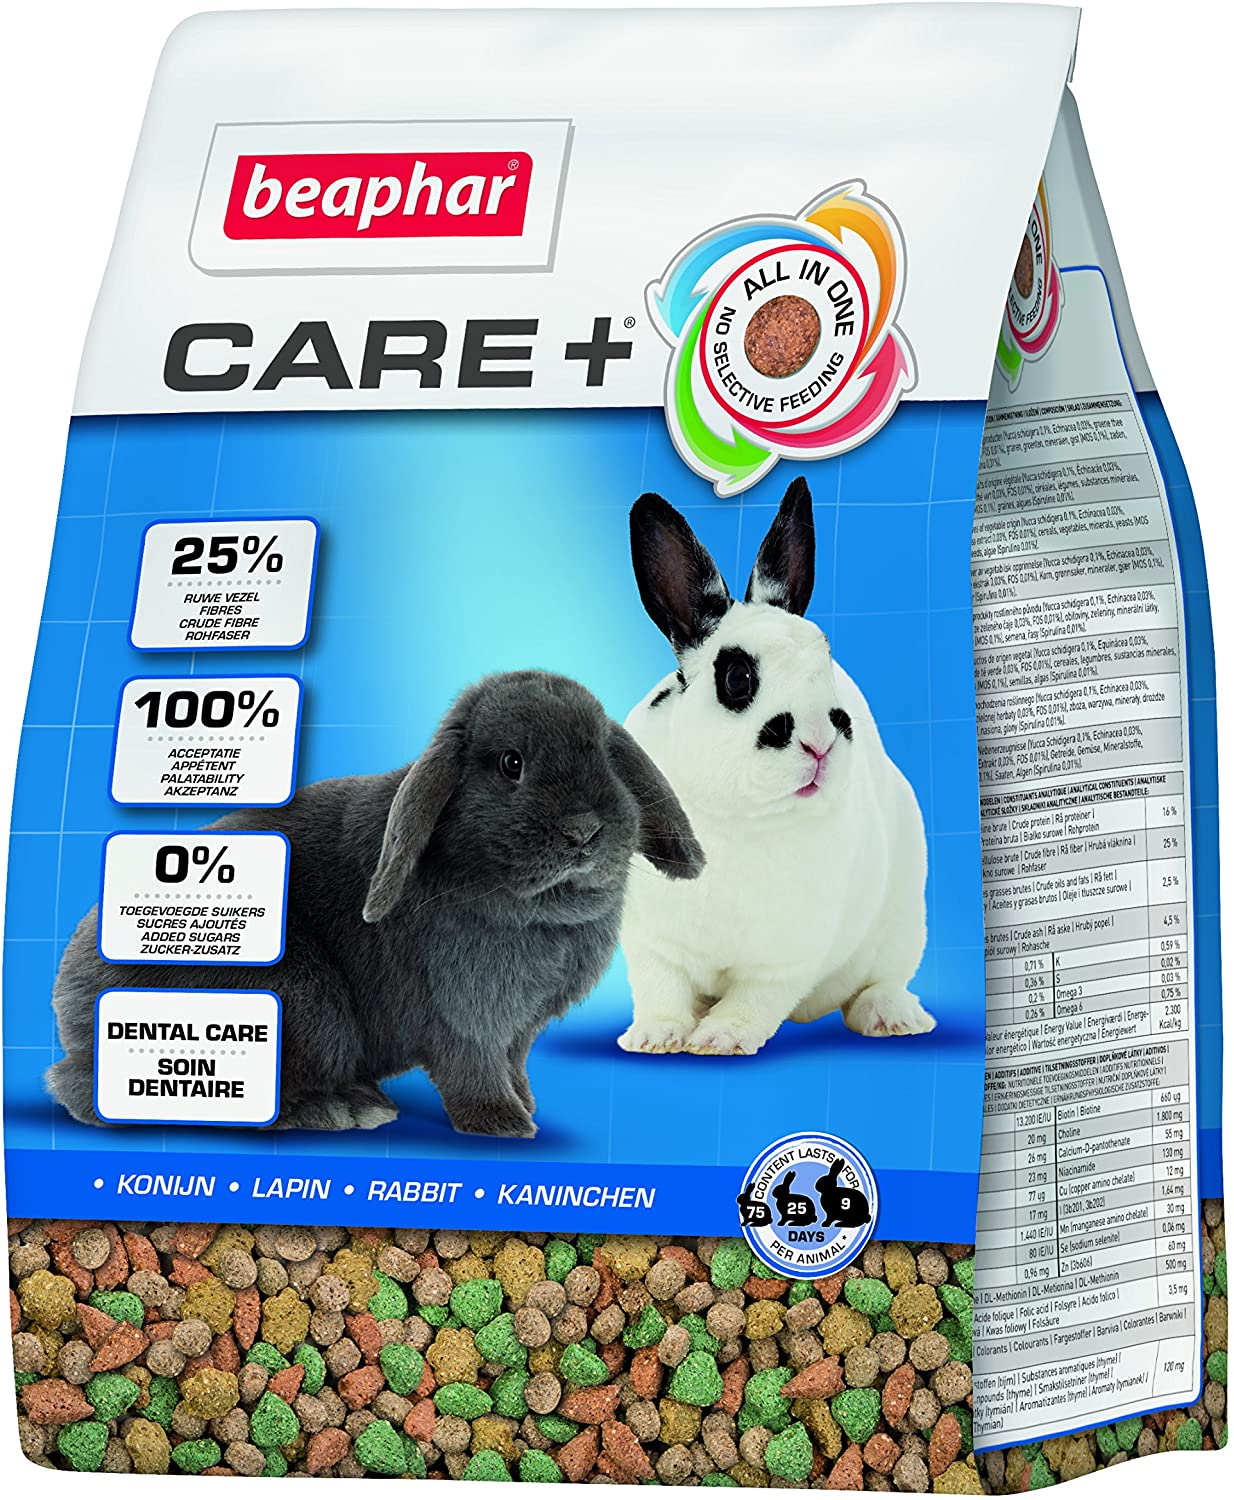  Beaphar - Comida Care Plus para conejos 